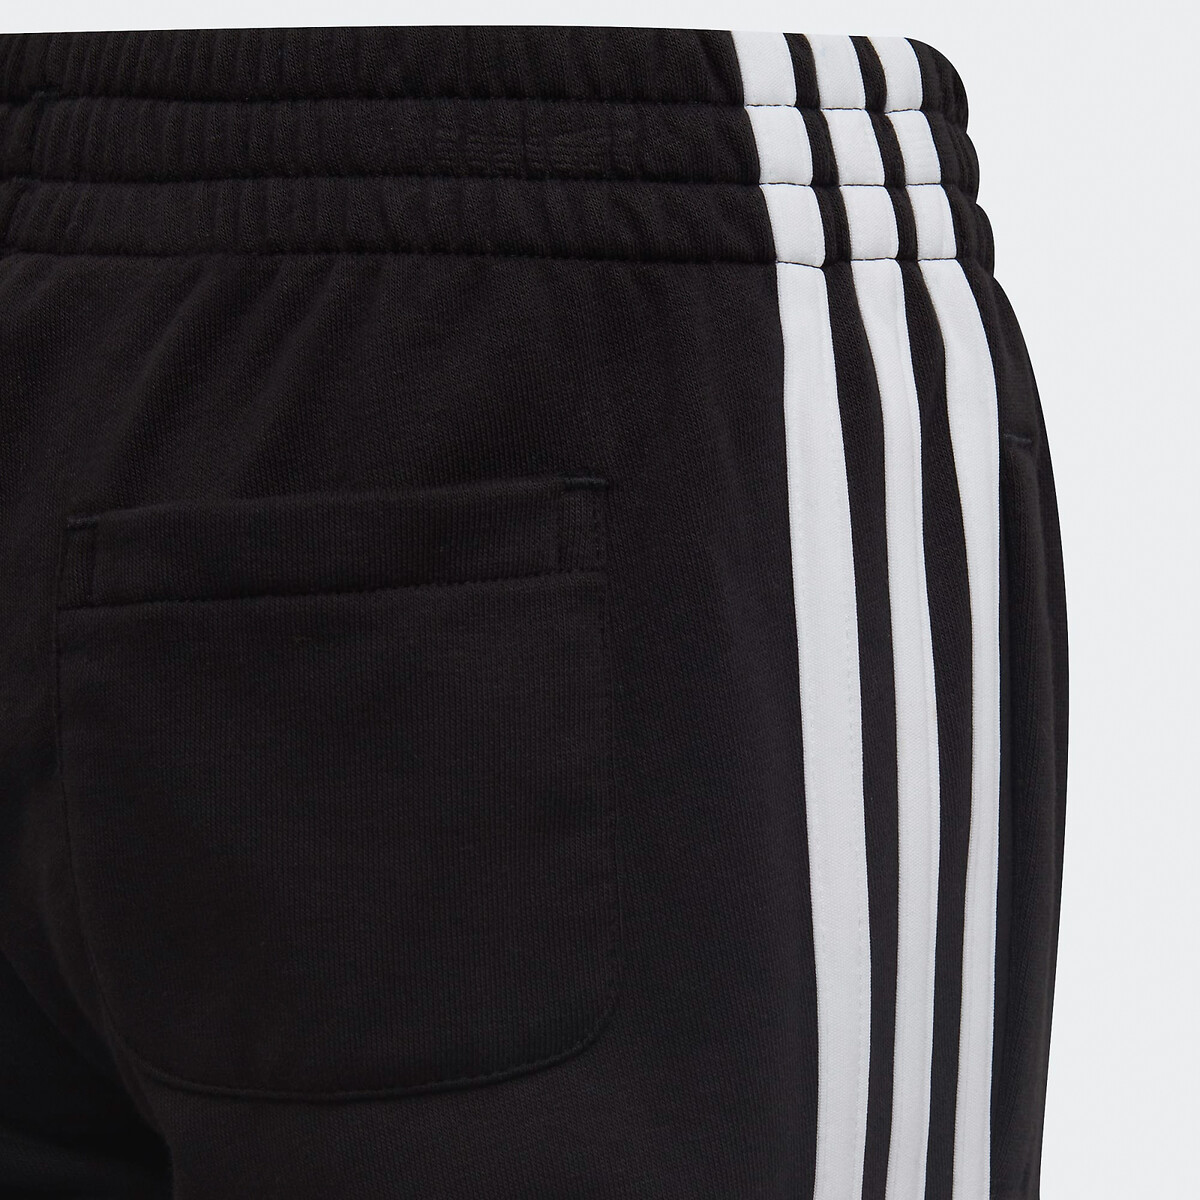 Pef Derecho almohadilla Pantalón 3-stripes negro Adidas Performance | La Redoute